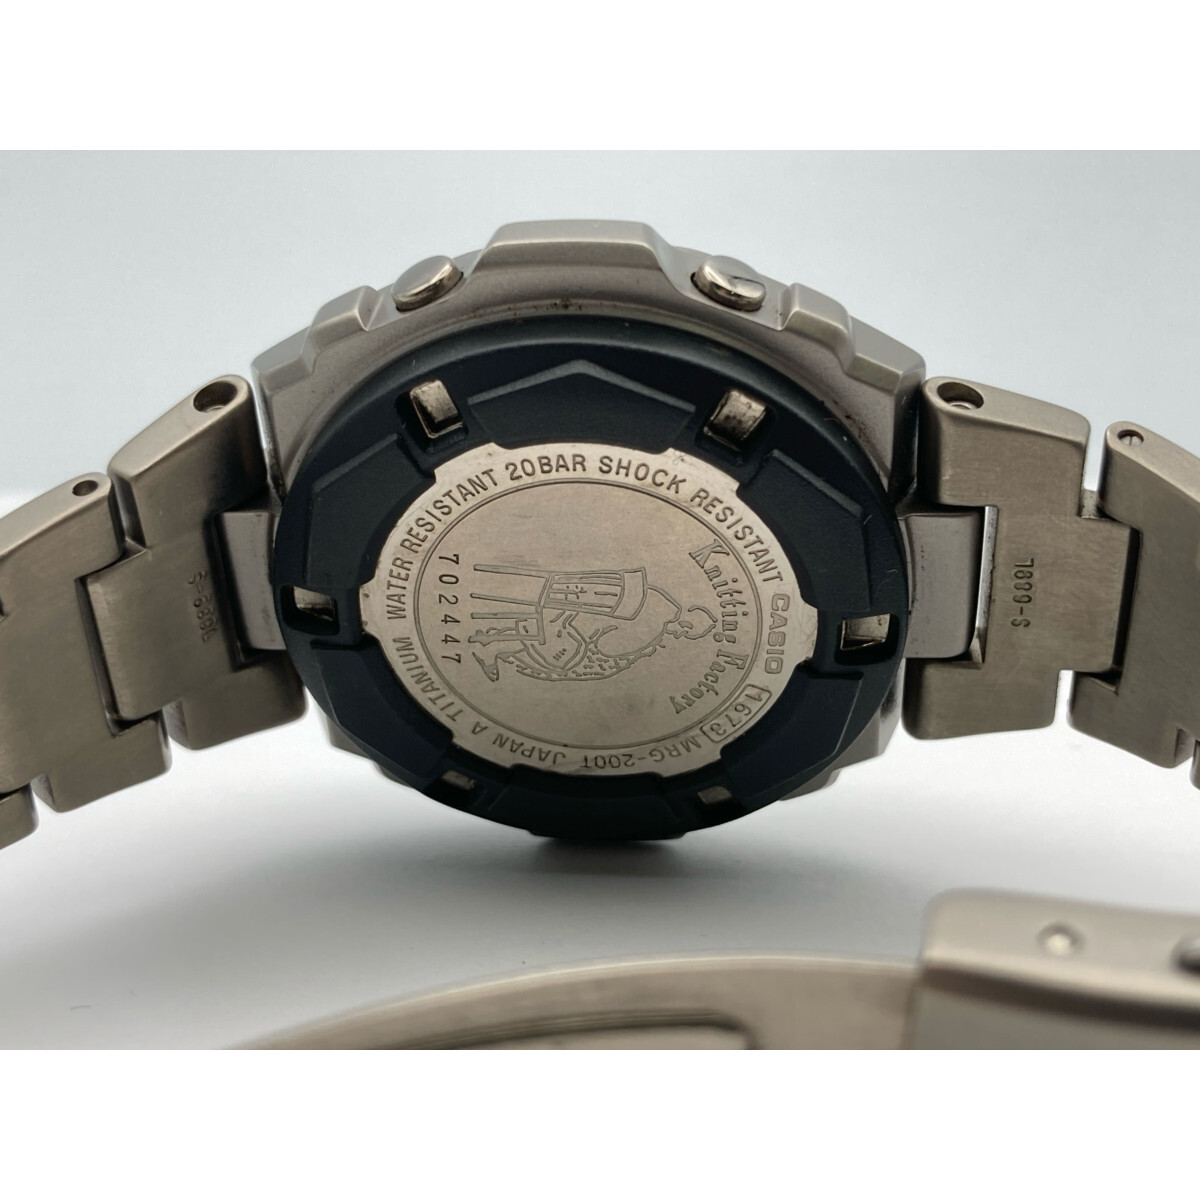 G-SHOCKji- shock x Knitting Factoryniting Factory MRG-200T MR-G digital quarts wristwatch 